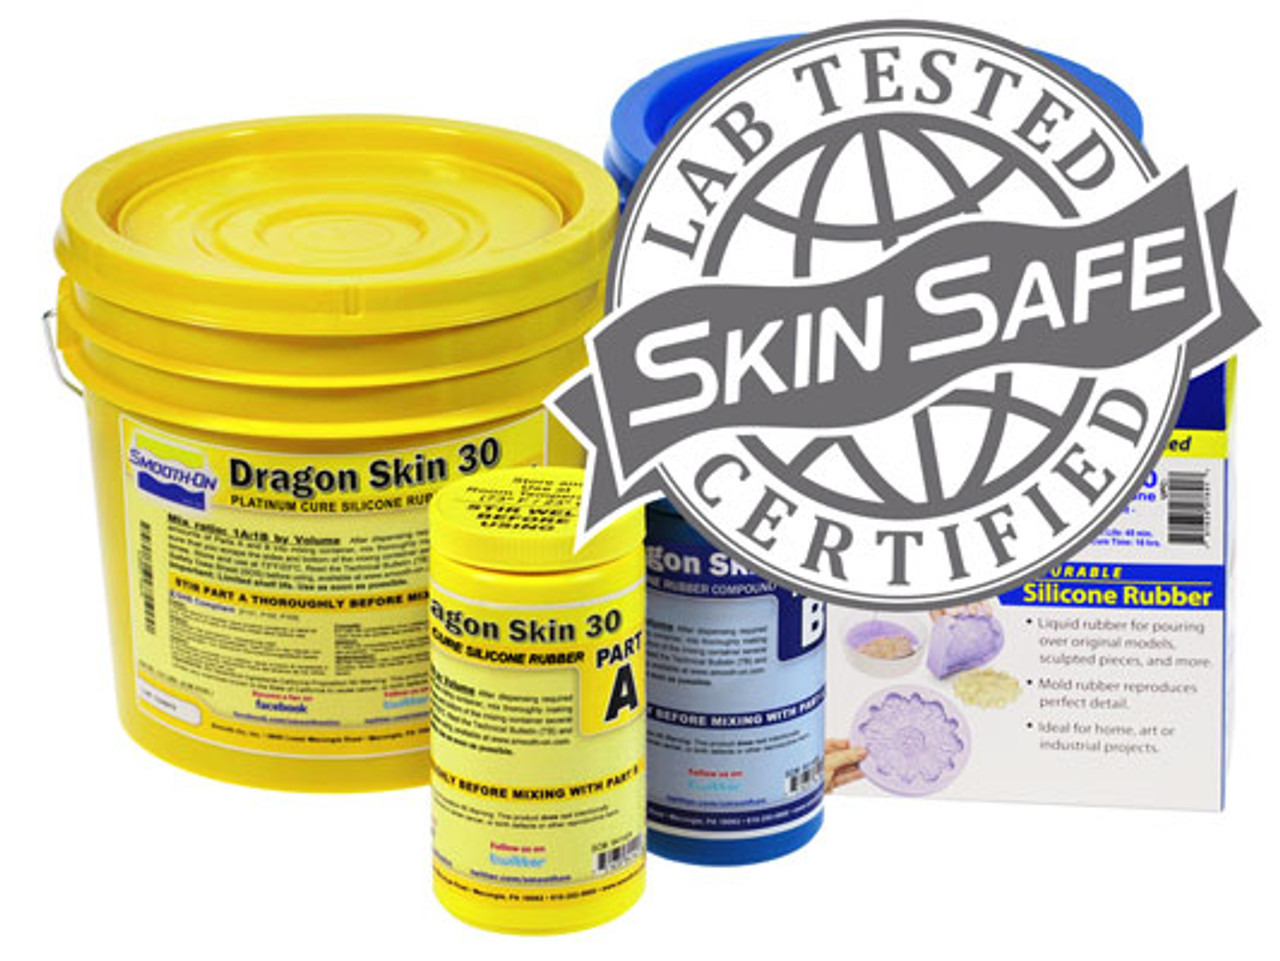 Dragon Skin™ 30 Product Information